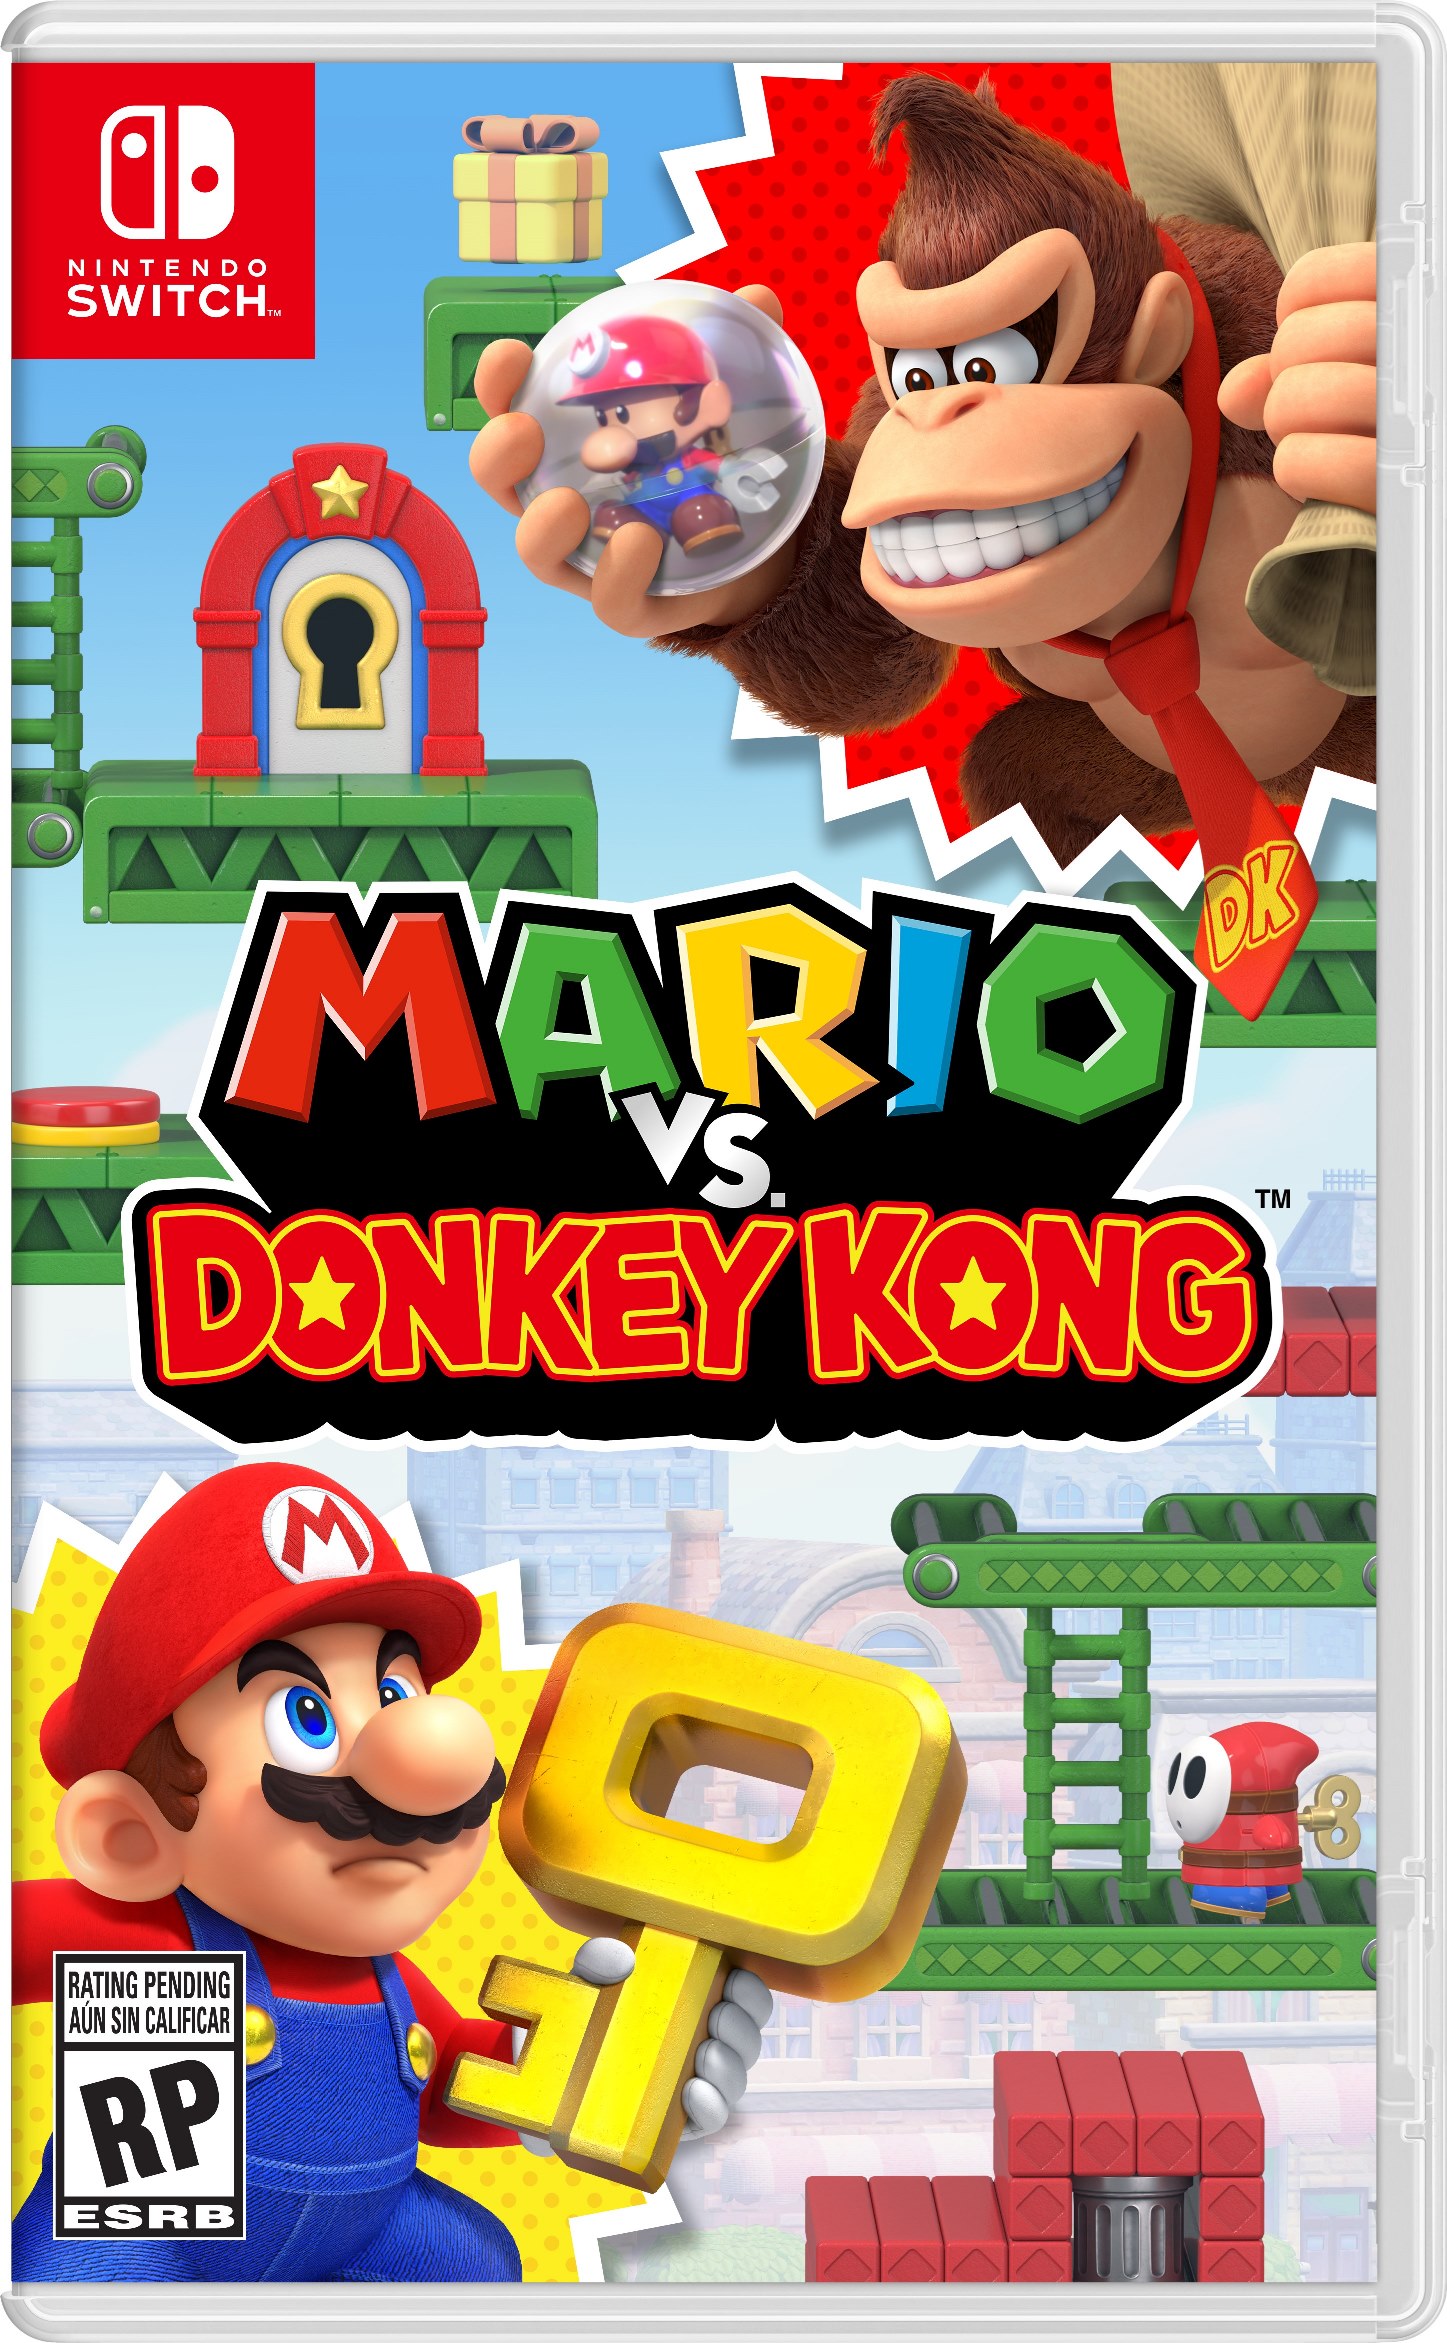 Mario vs. Donkey Kong Switch boxart, screenshots